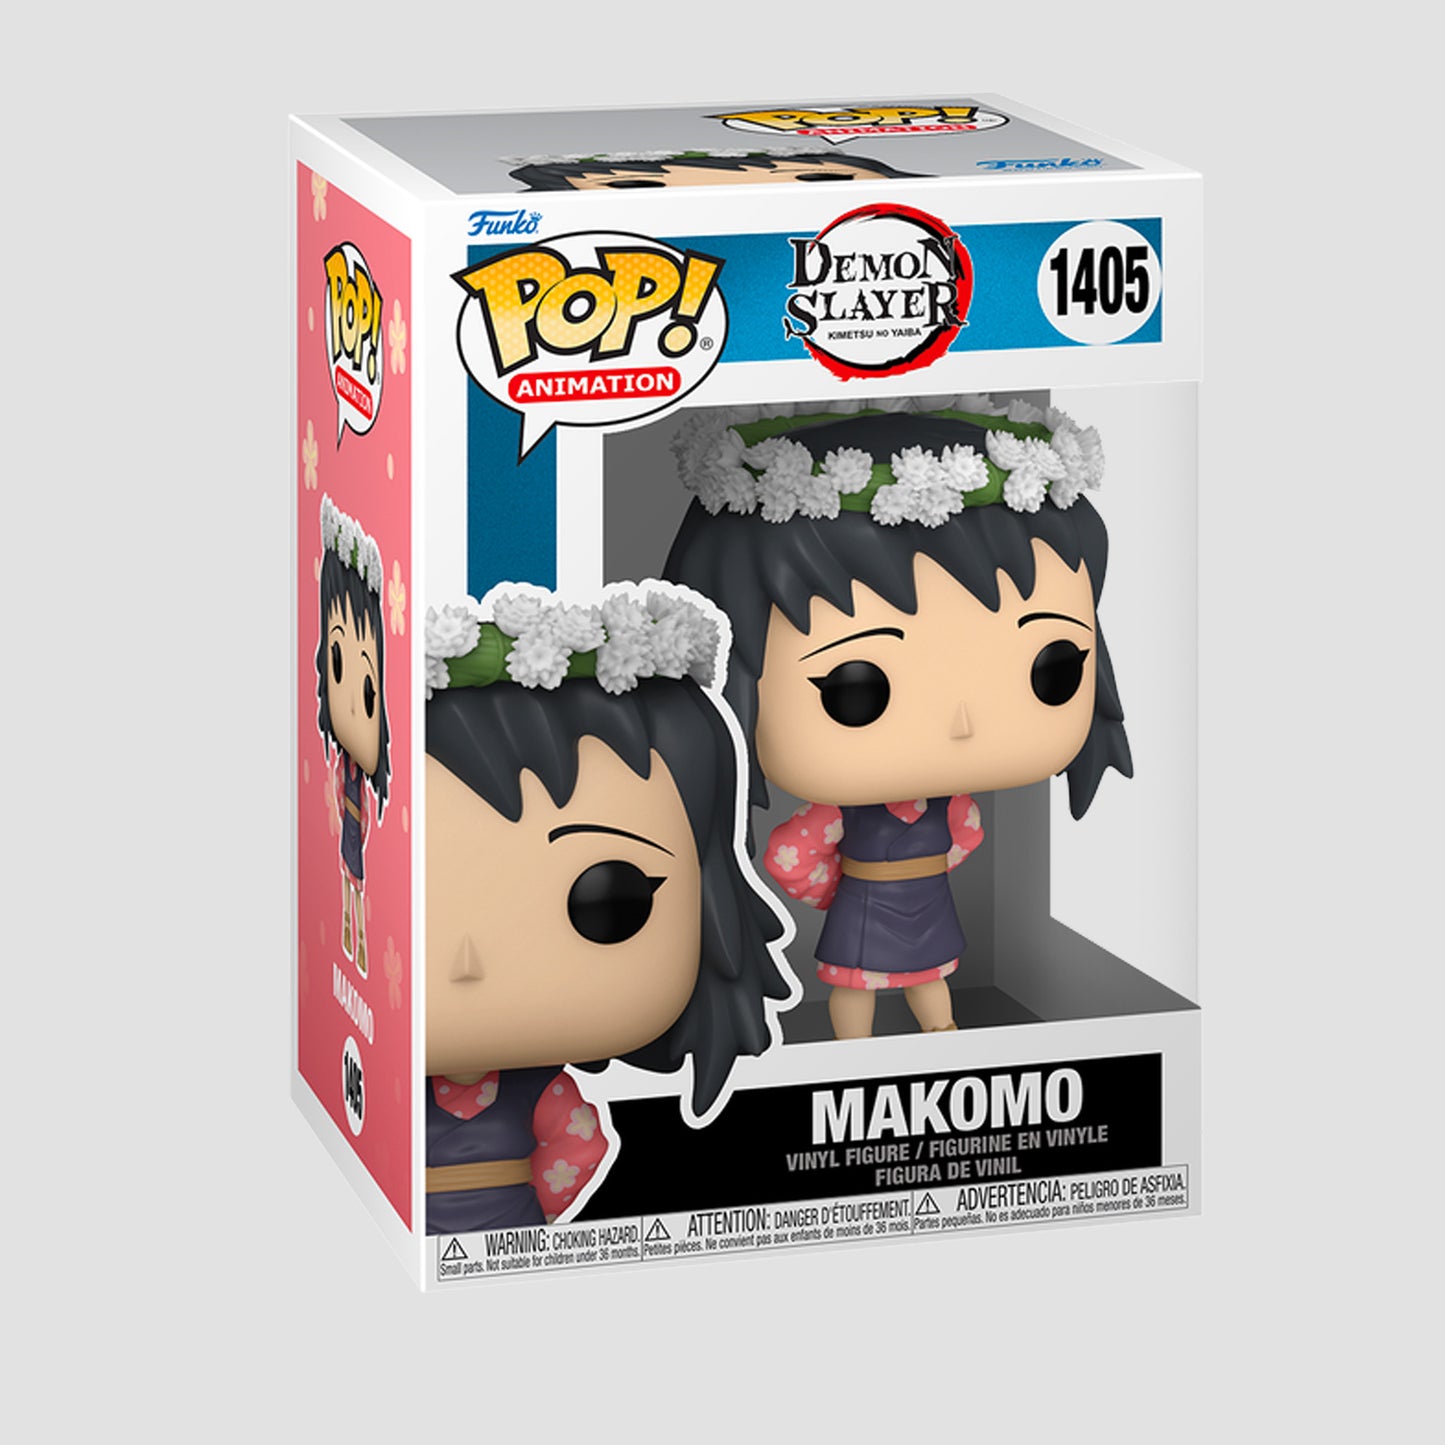 Makomo (Demon Slayer) Funko Pop!